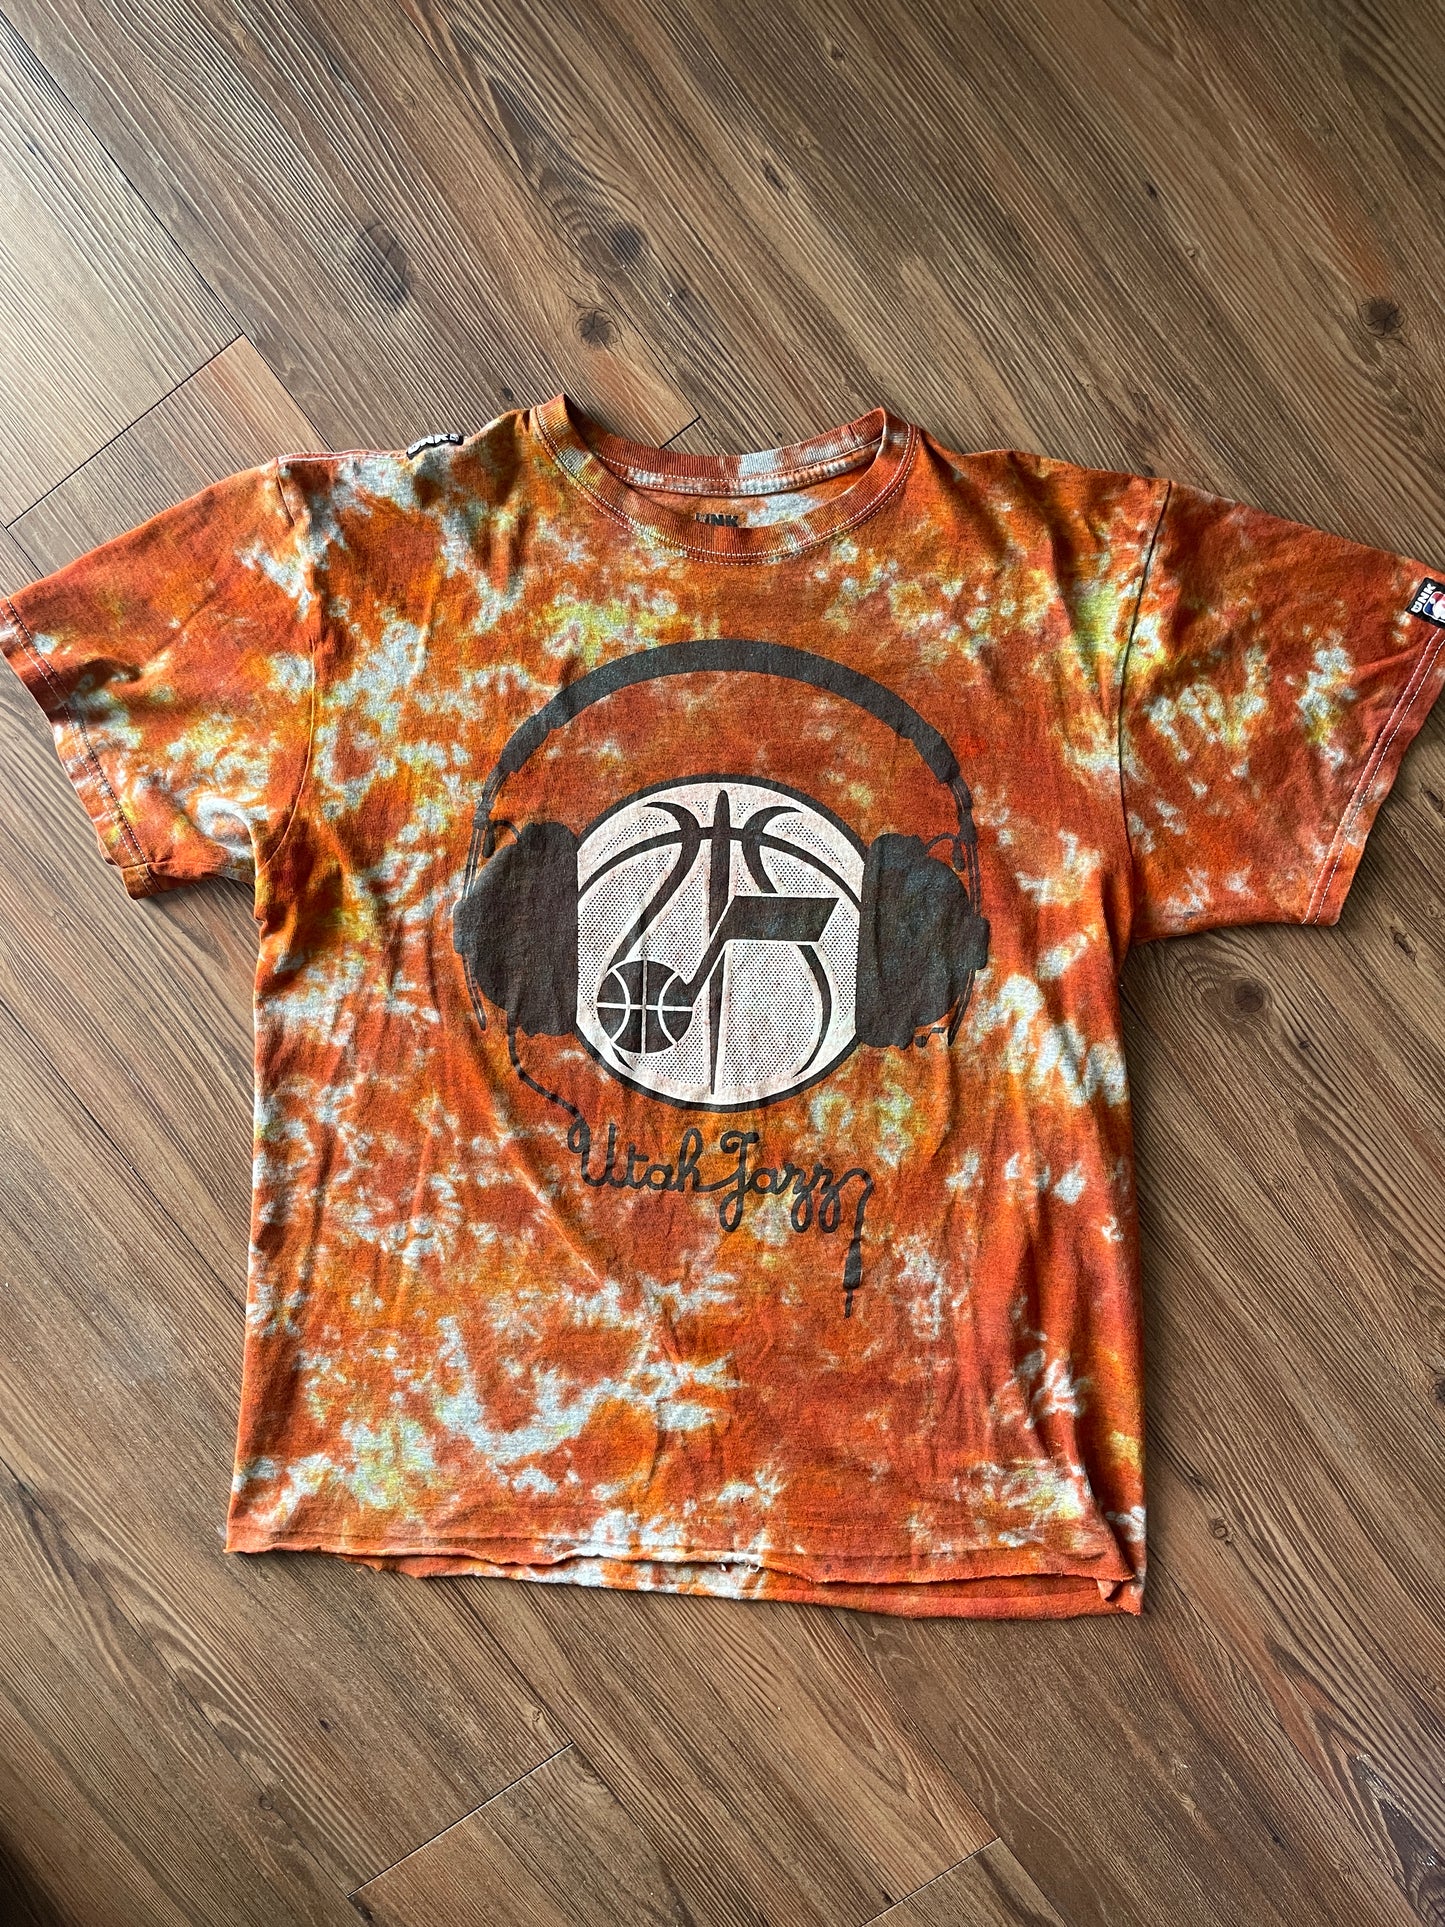 LARGE Men’s UNK Utah Jazz Basketball Headphones Tie Dye T-Shirt | Shades of Orange and Yellow Crumpled Fire Dye Short Sleeve Top